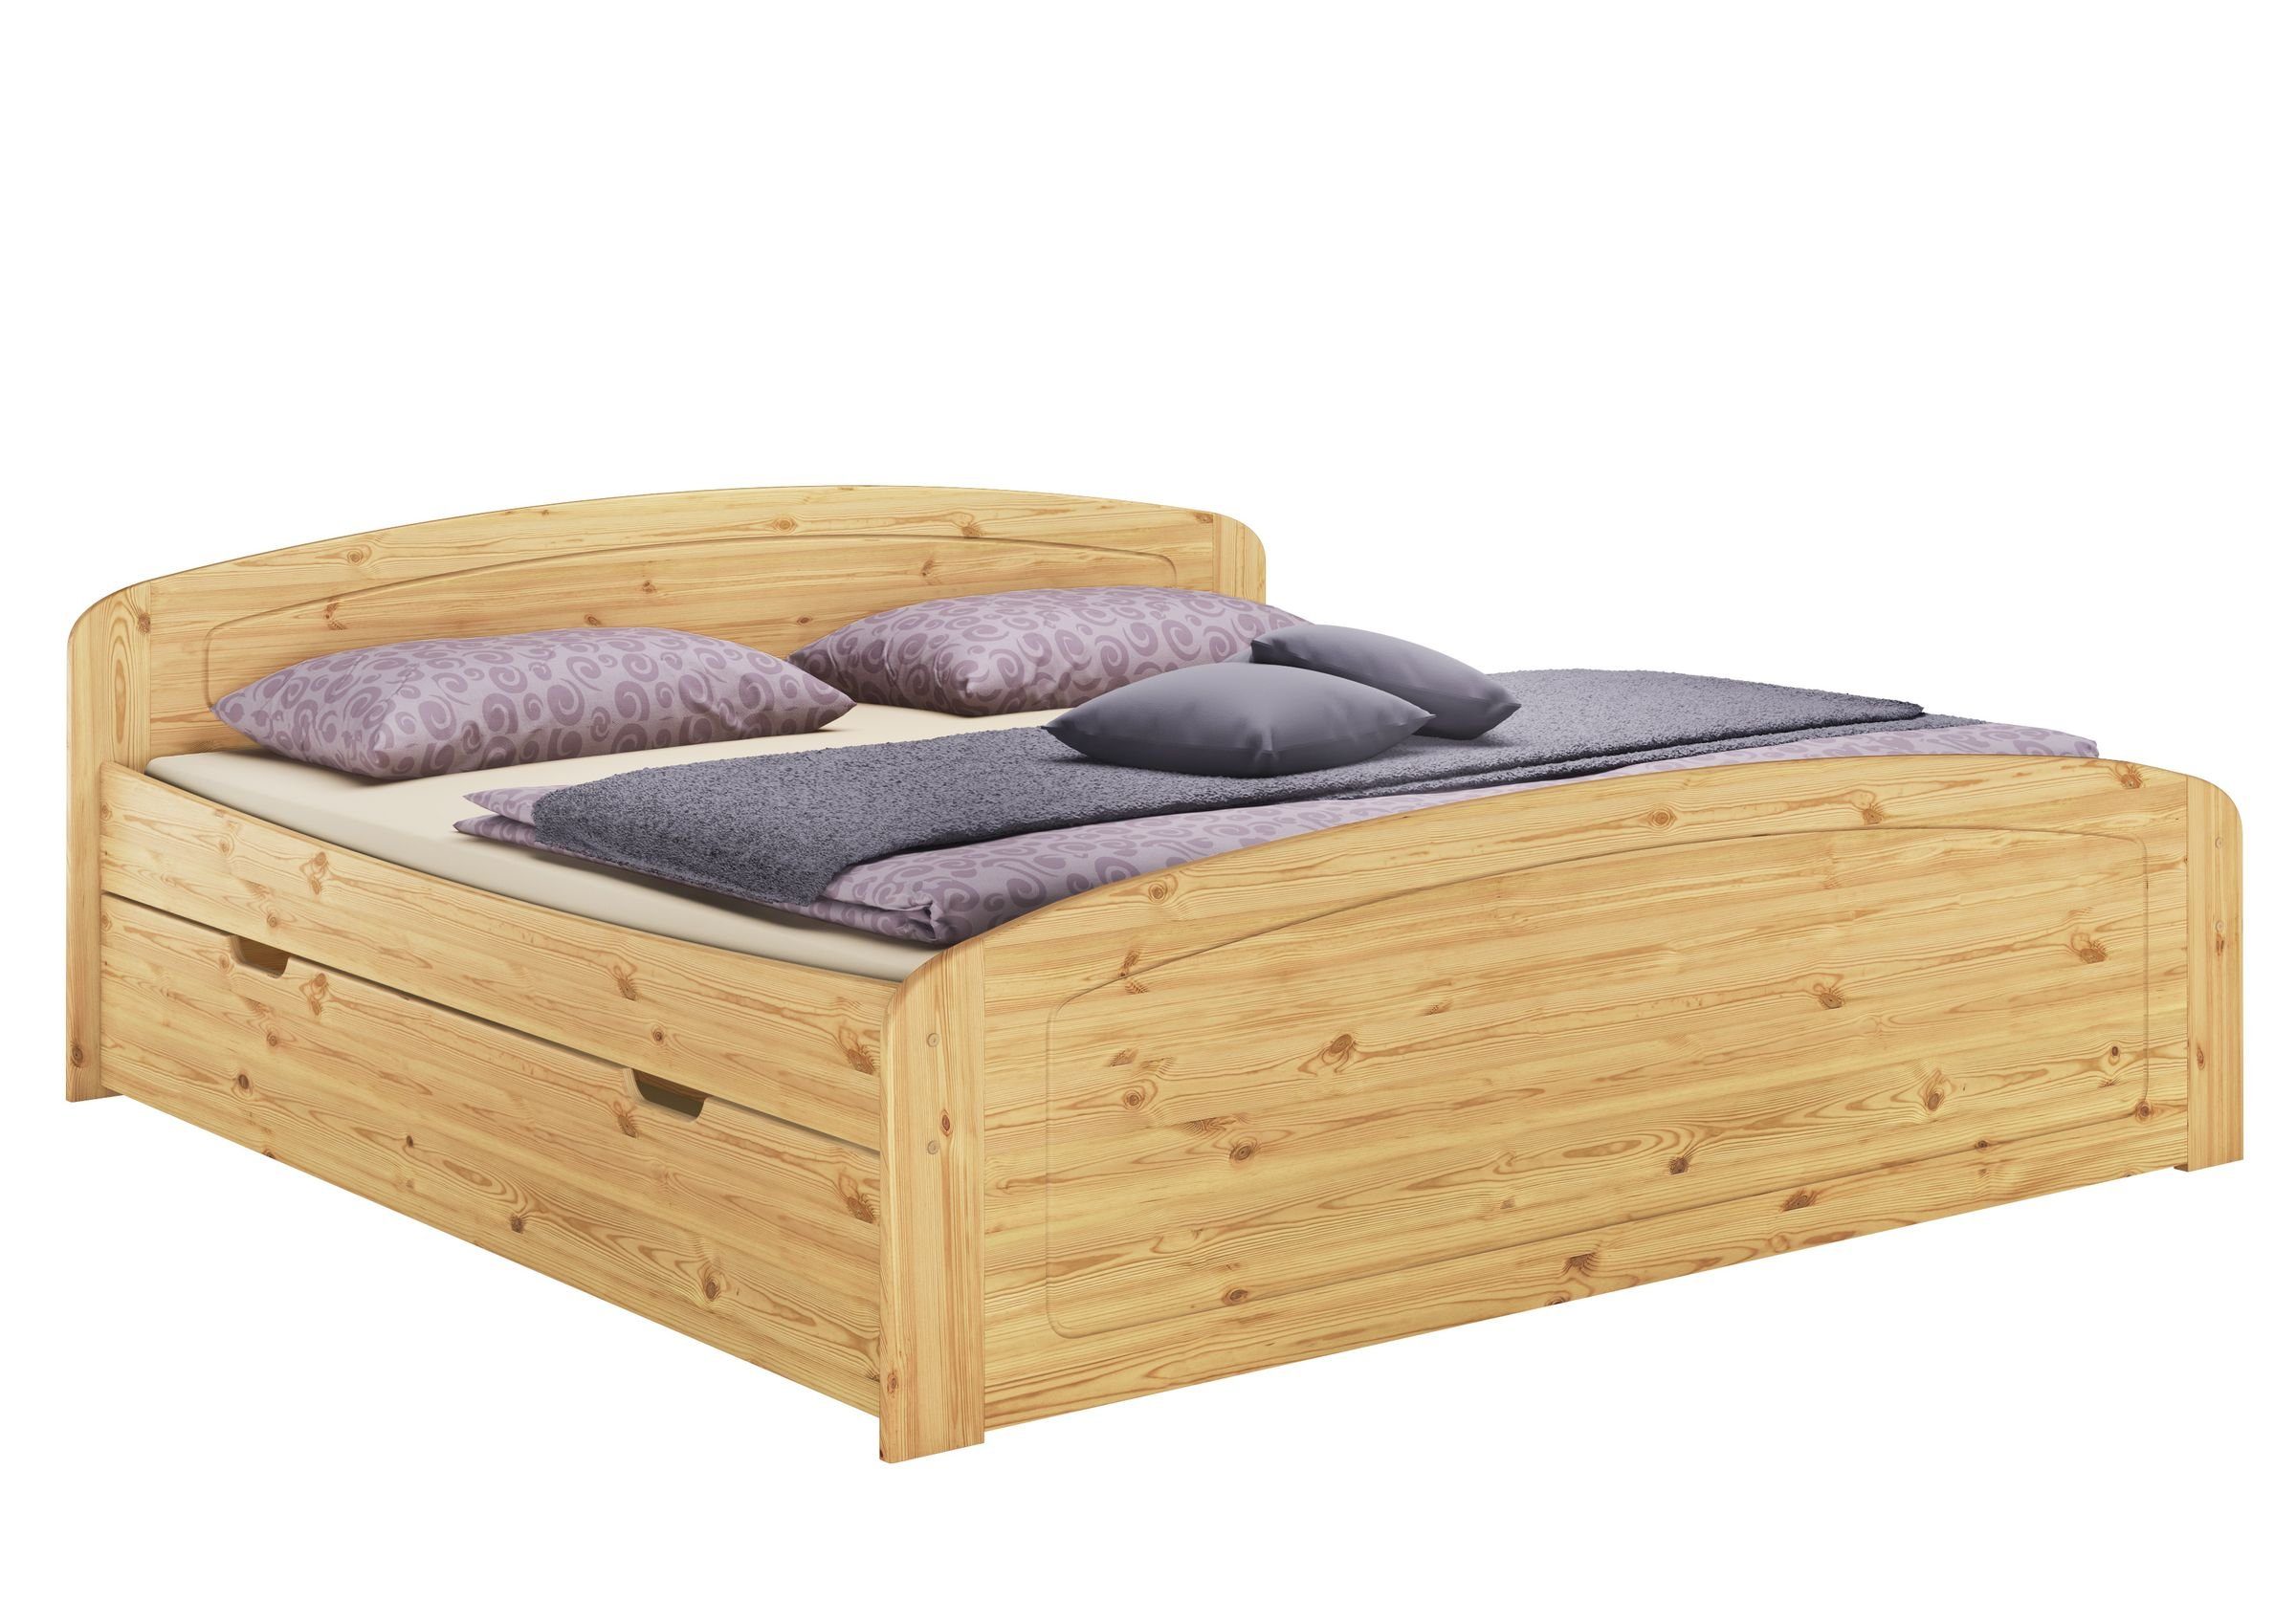 ERST-HOLZ Bett Doppelbett 200x200 Kiefer mit 2 Federholzrahmen u. 2  Matratzen, Kieferfarblos lackiert